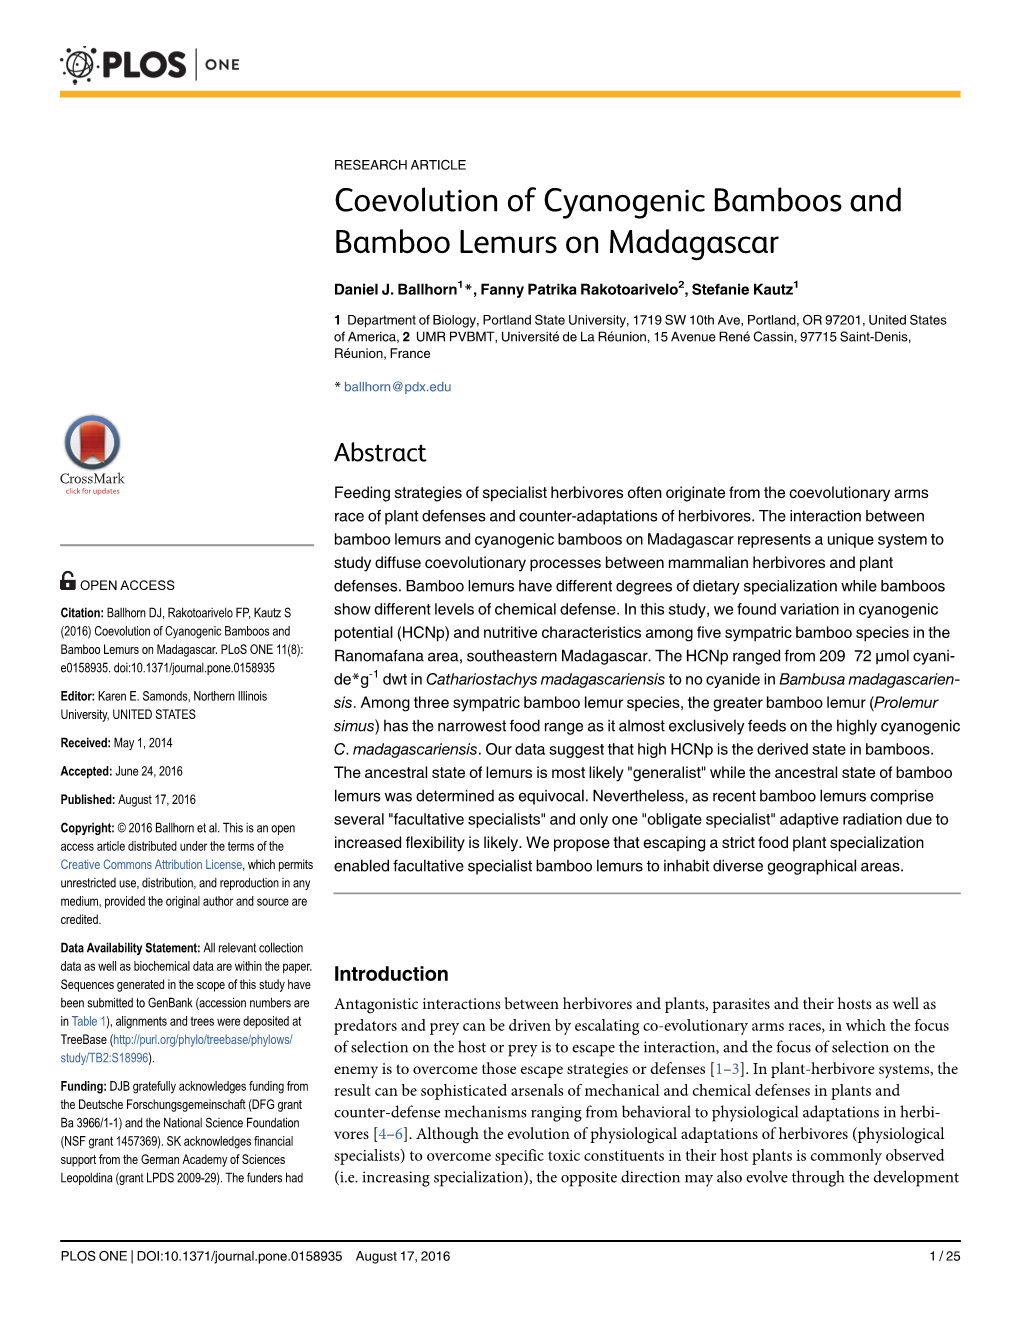 Coevolution of Cyanogenic Bamboos and Bamboo Lemurs on Madagascar